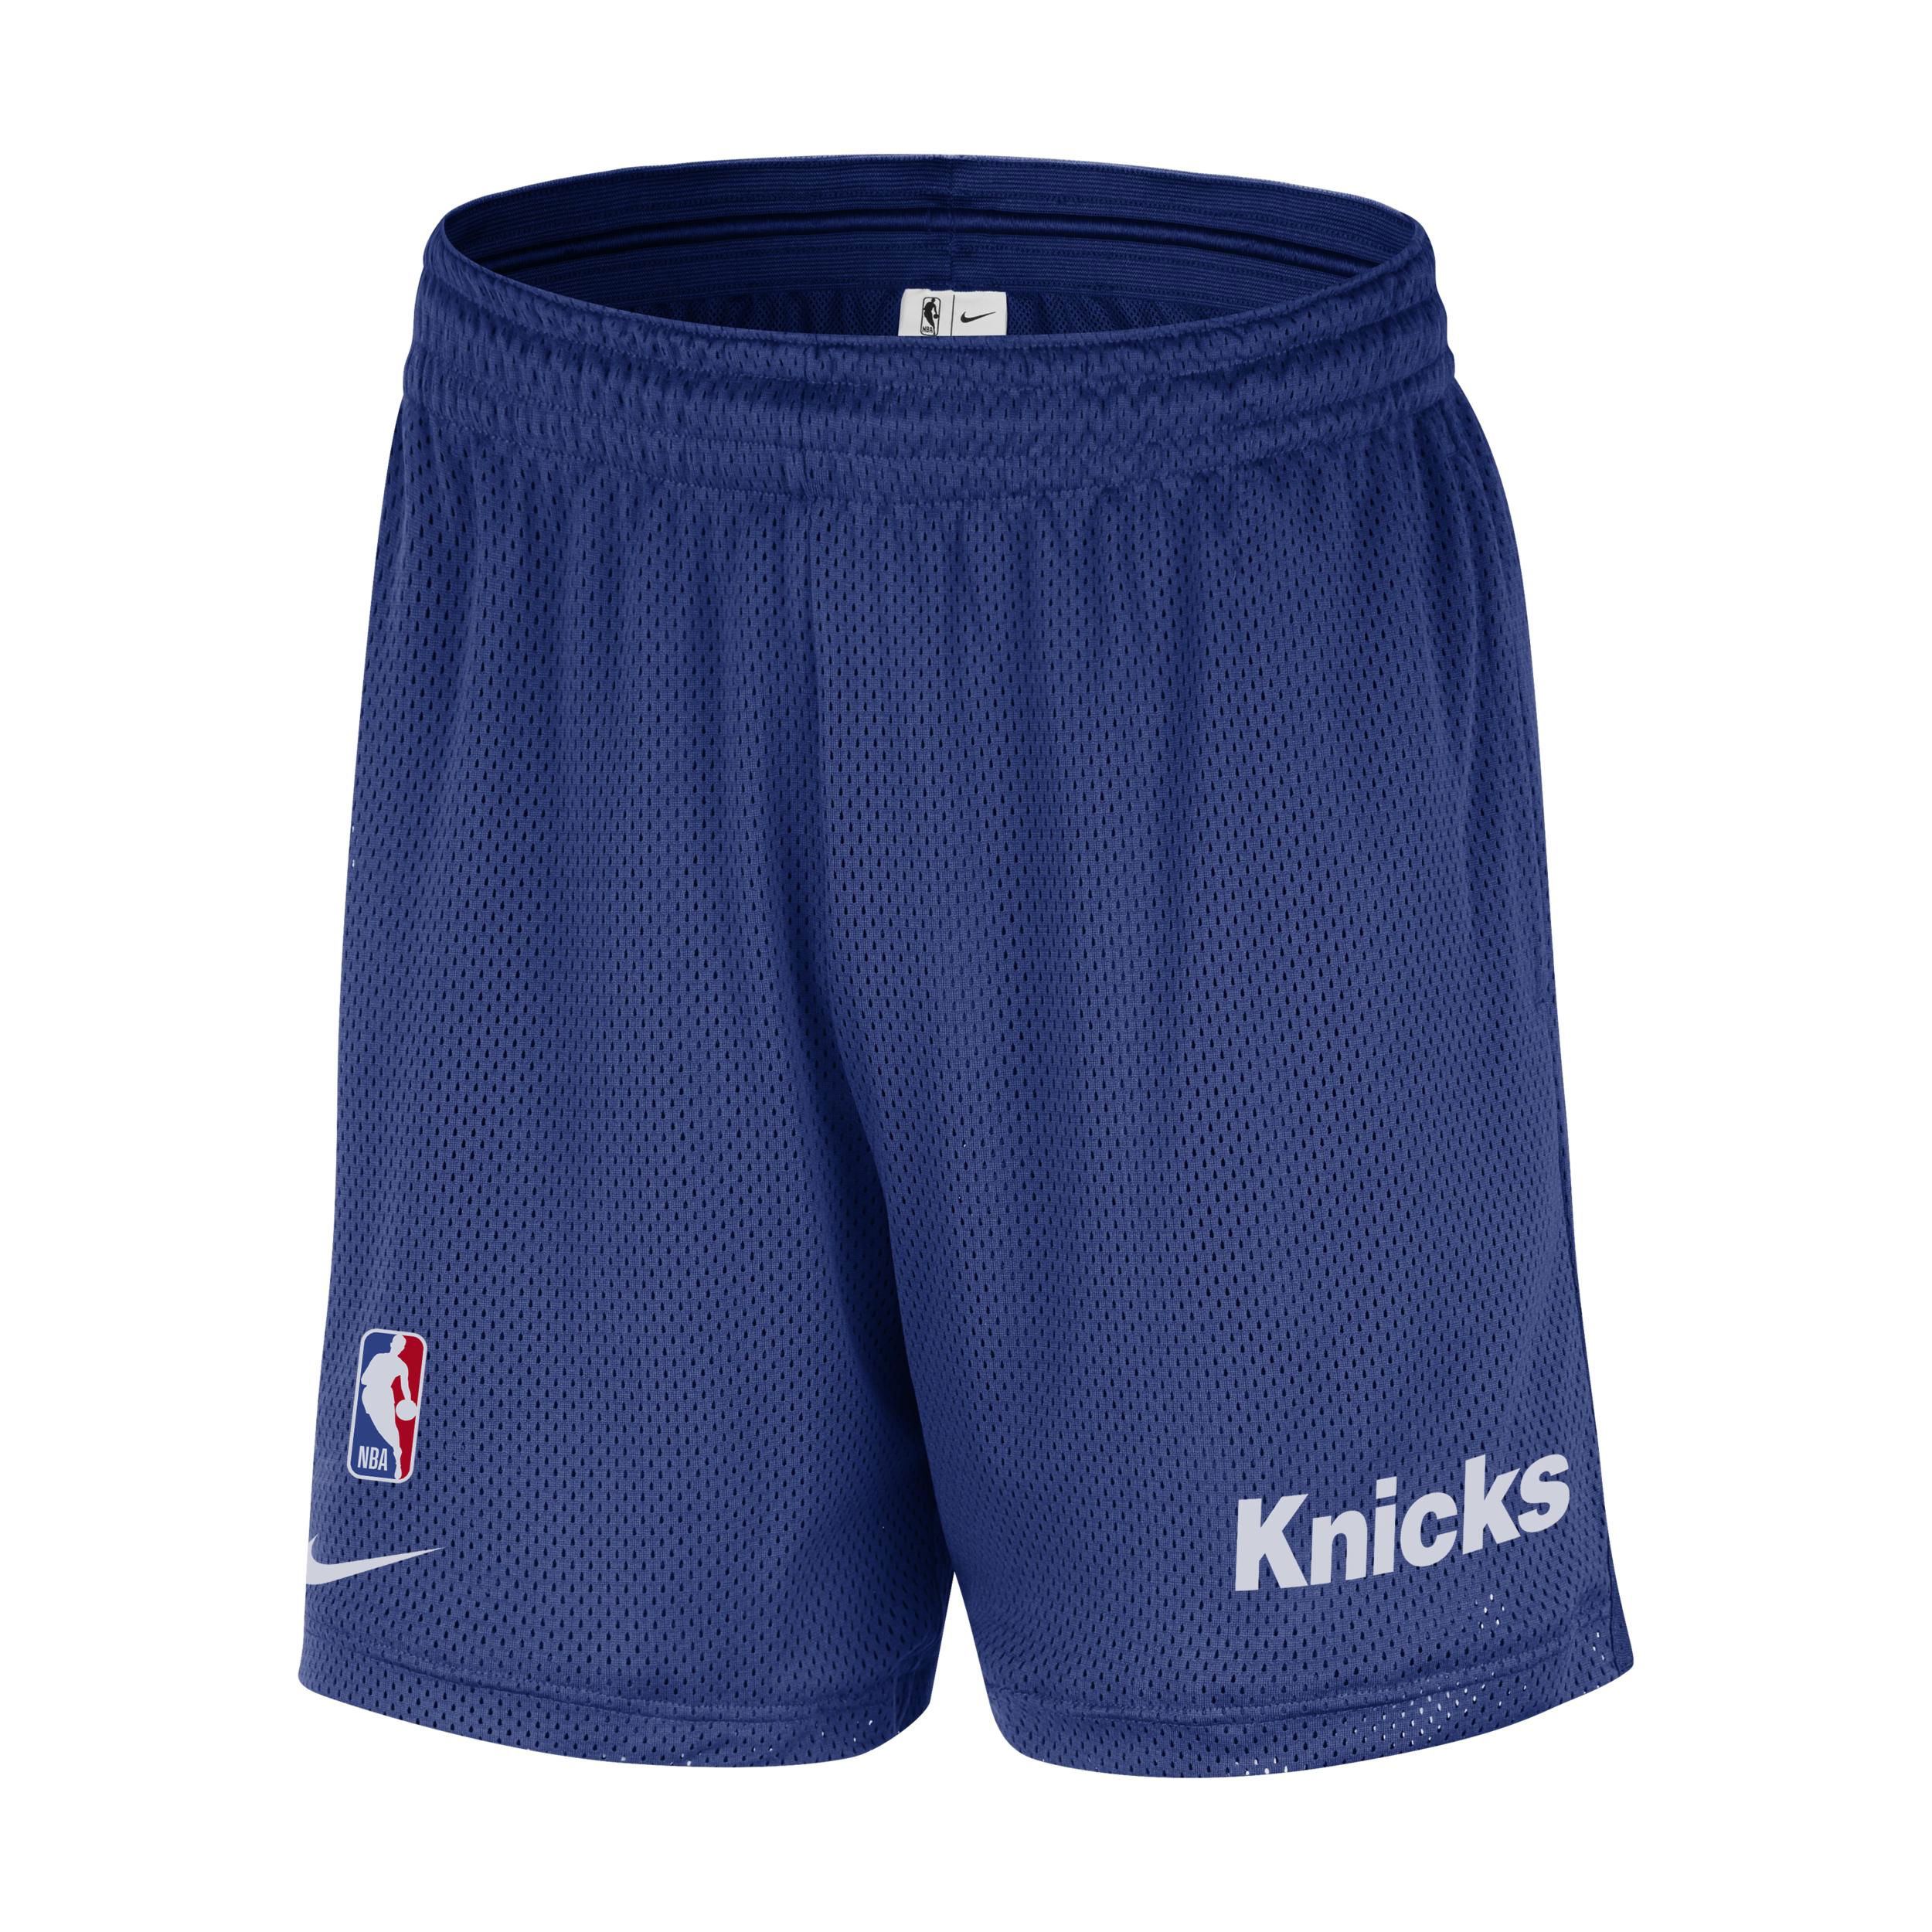 New York Knicks Nike Men's NBA Mesh Shorts by NIKE